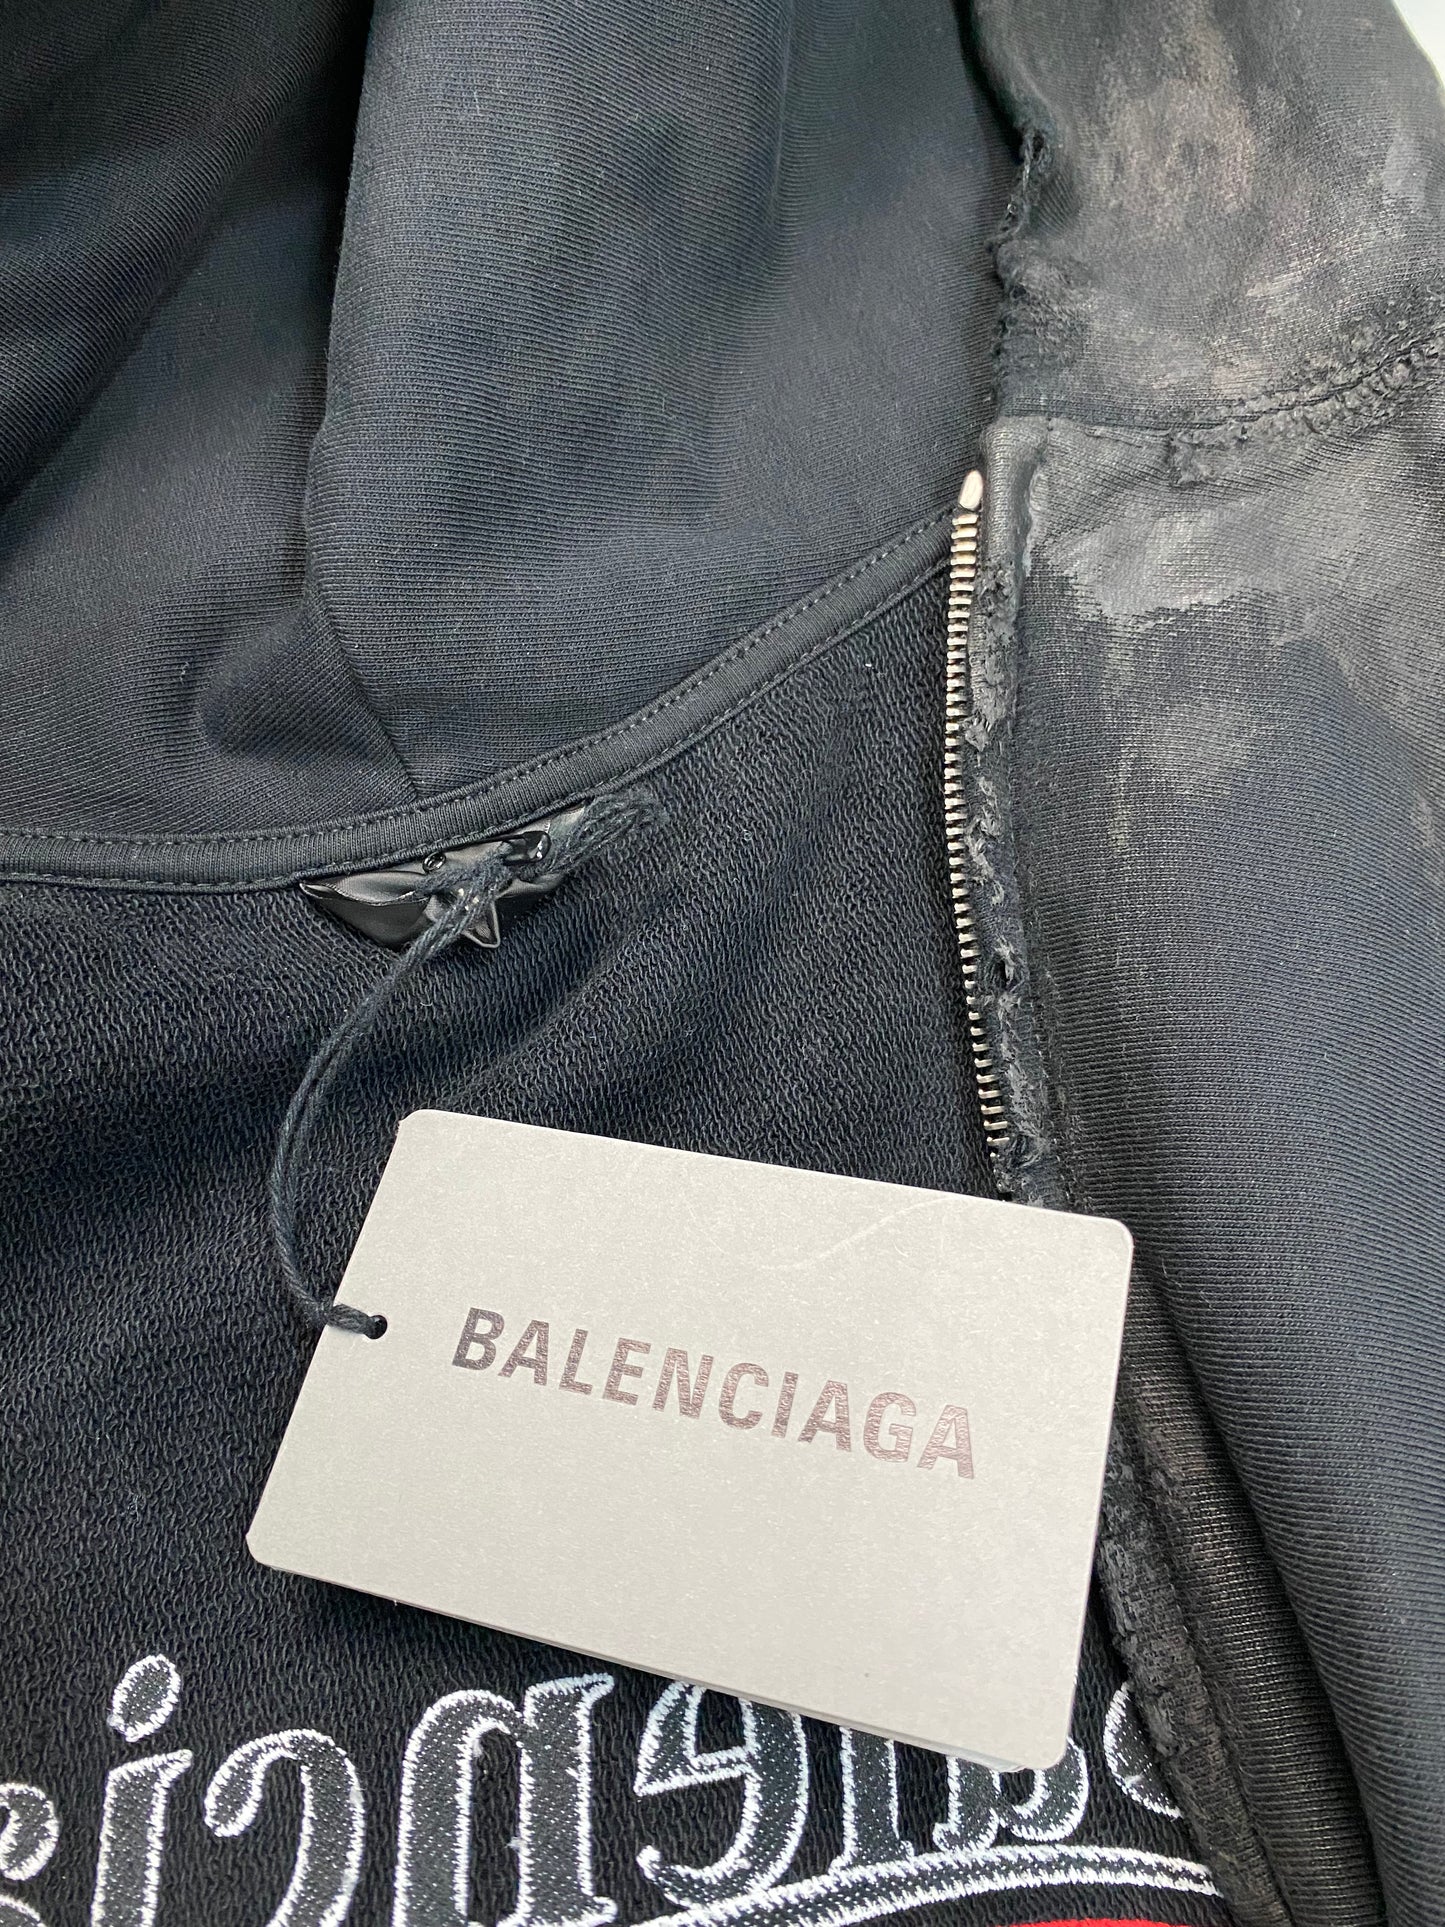 Balenciaga dirty gaffer taped mud zip up hoodie SZ:S